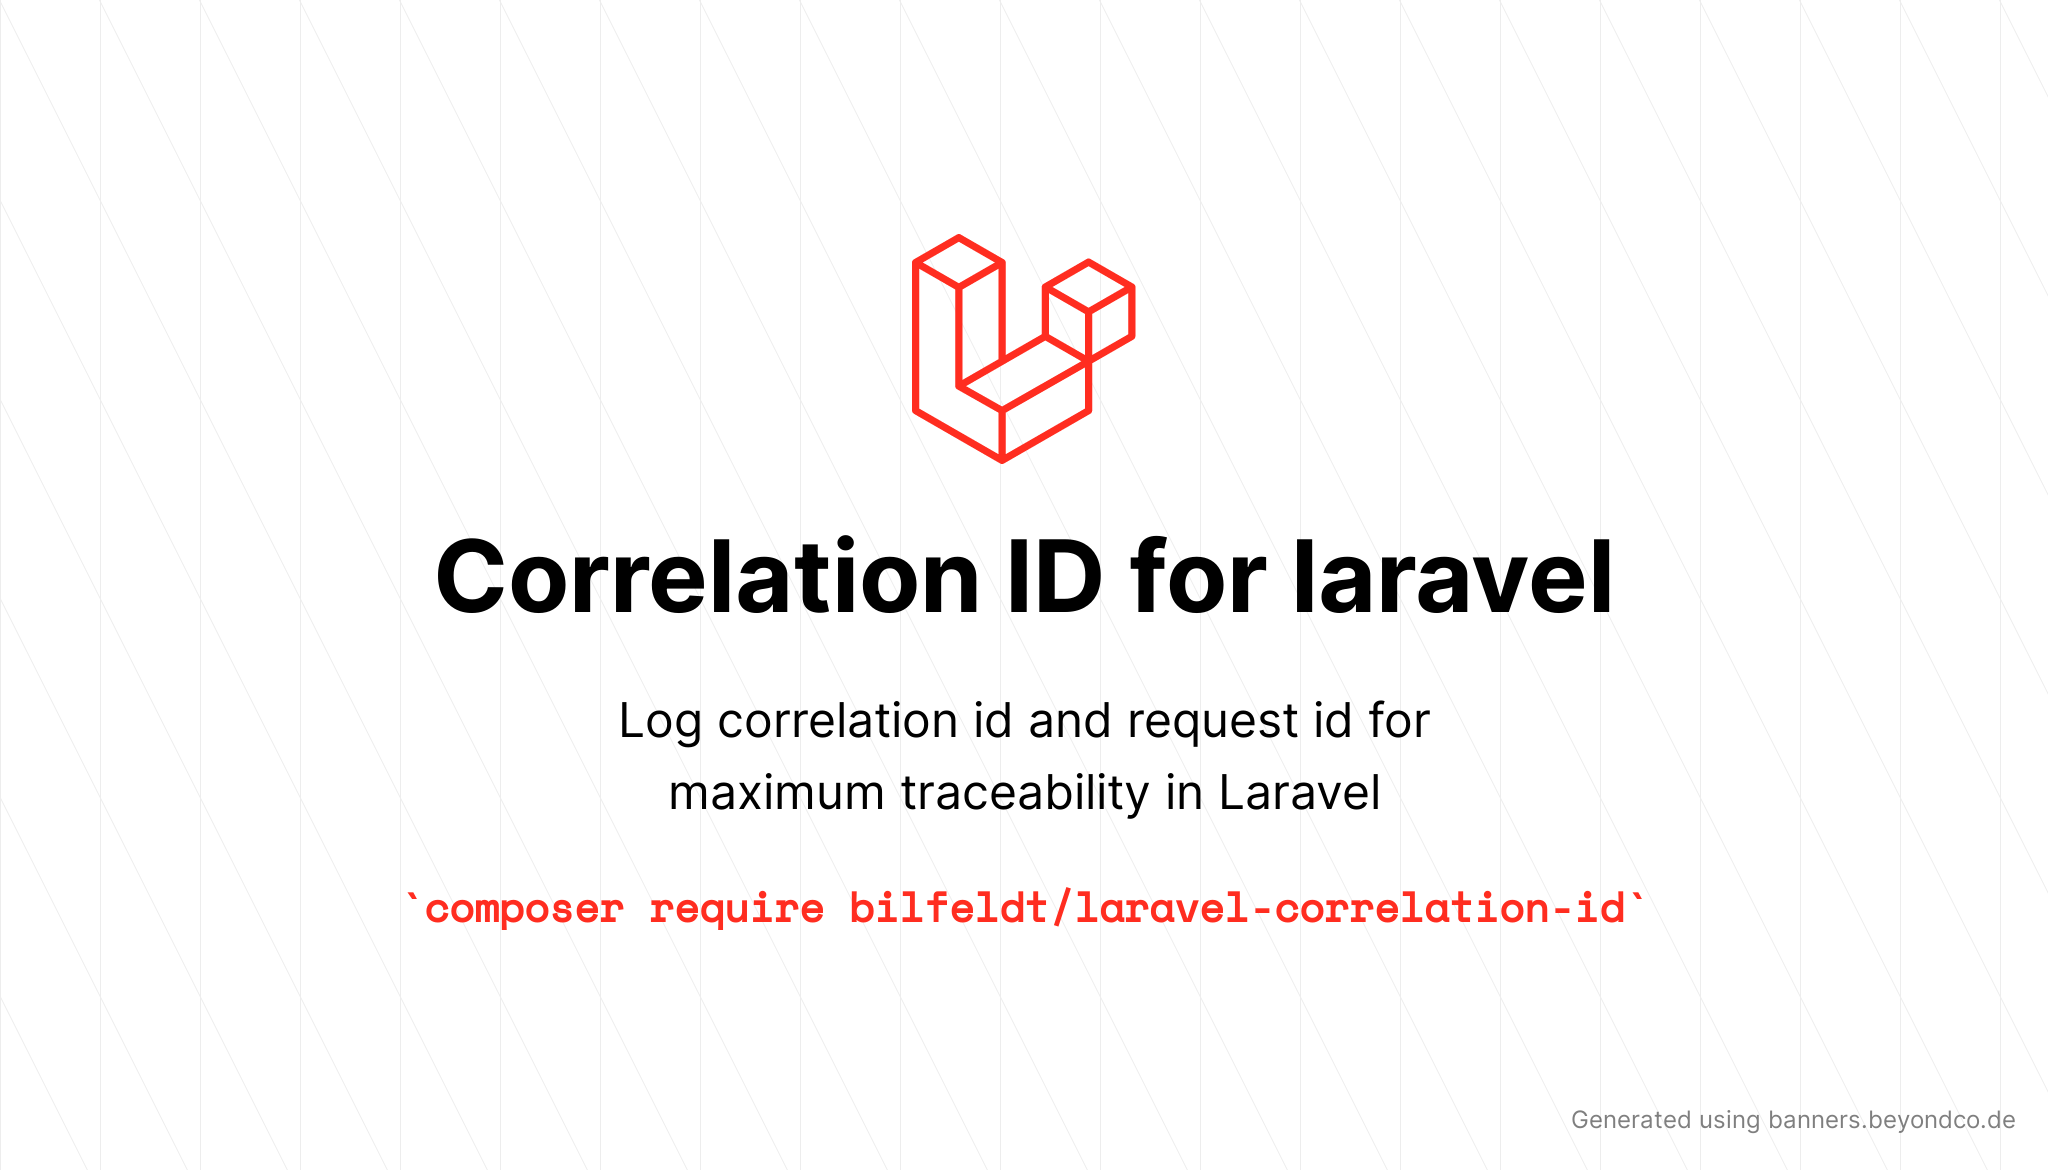 bilfeldt/laravel-correlation-id